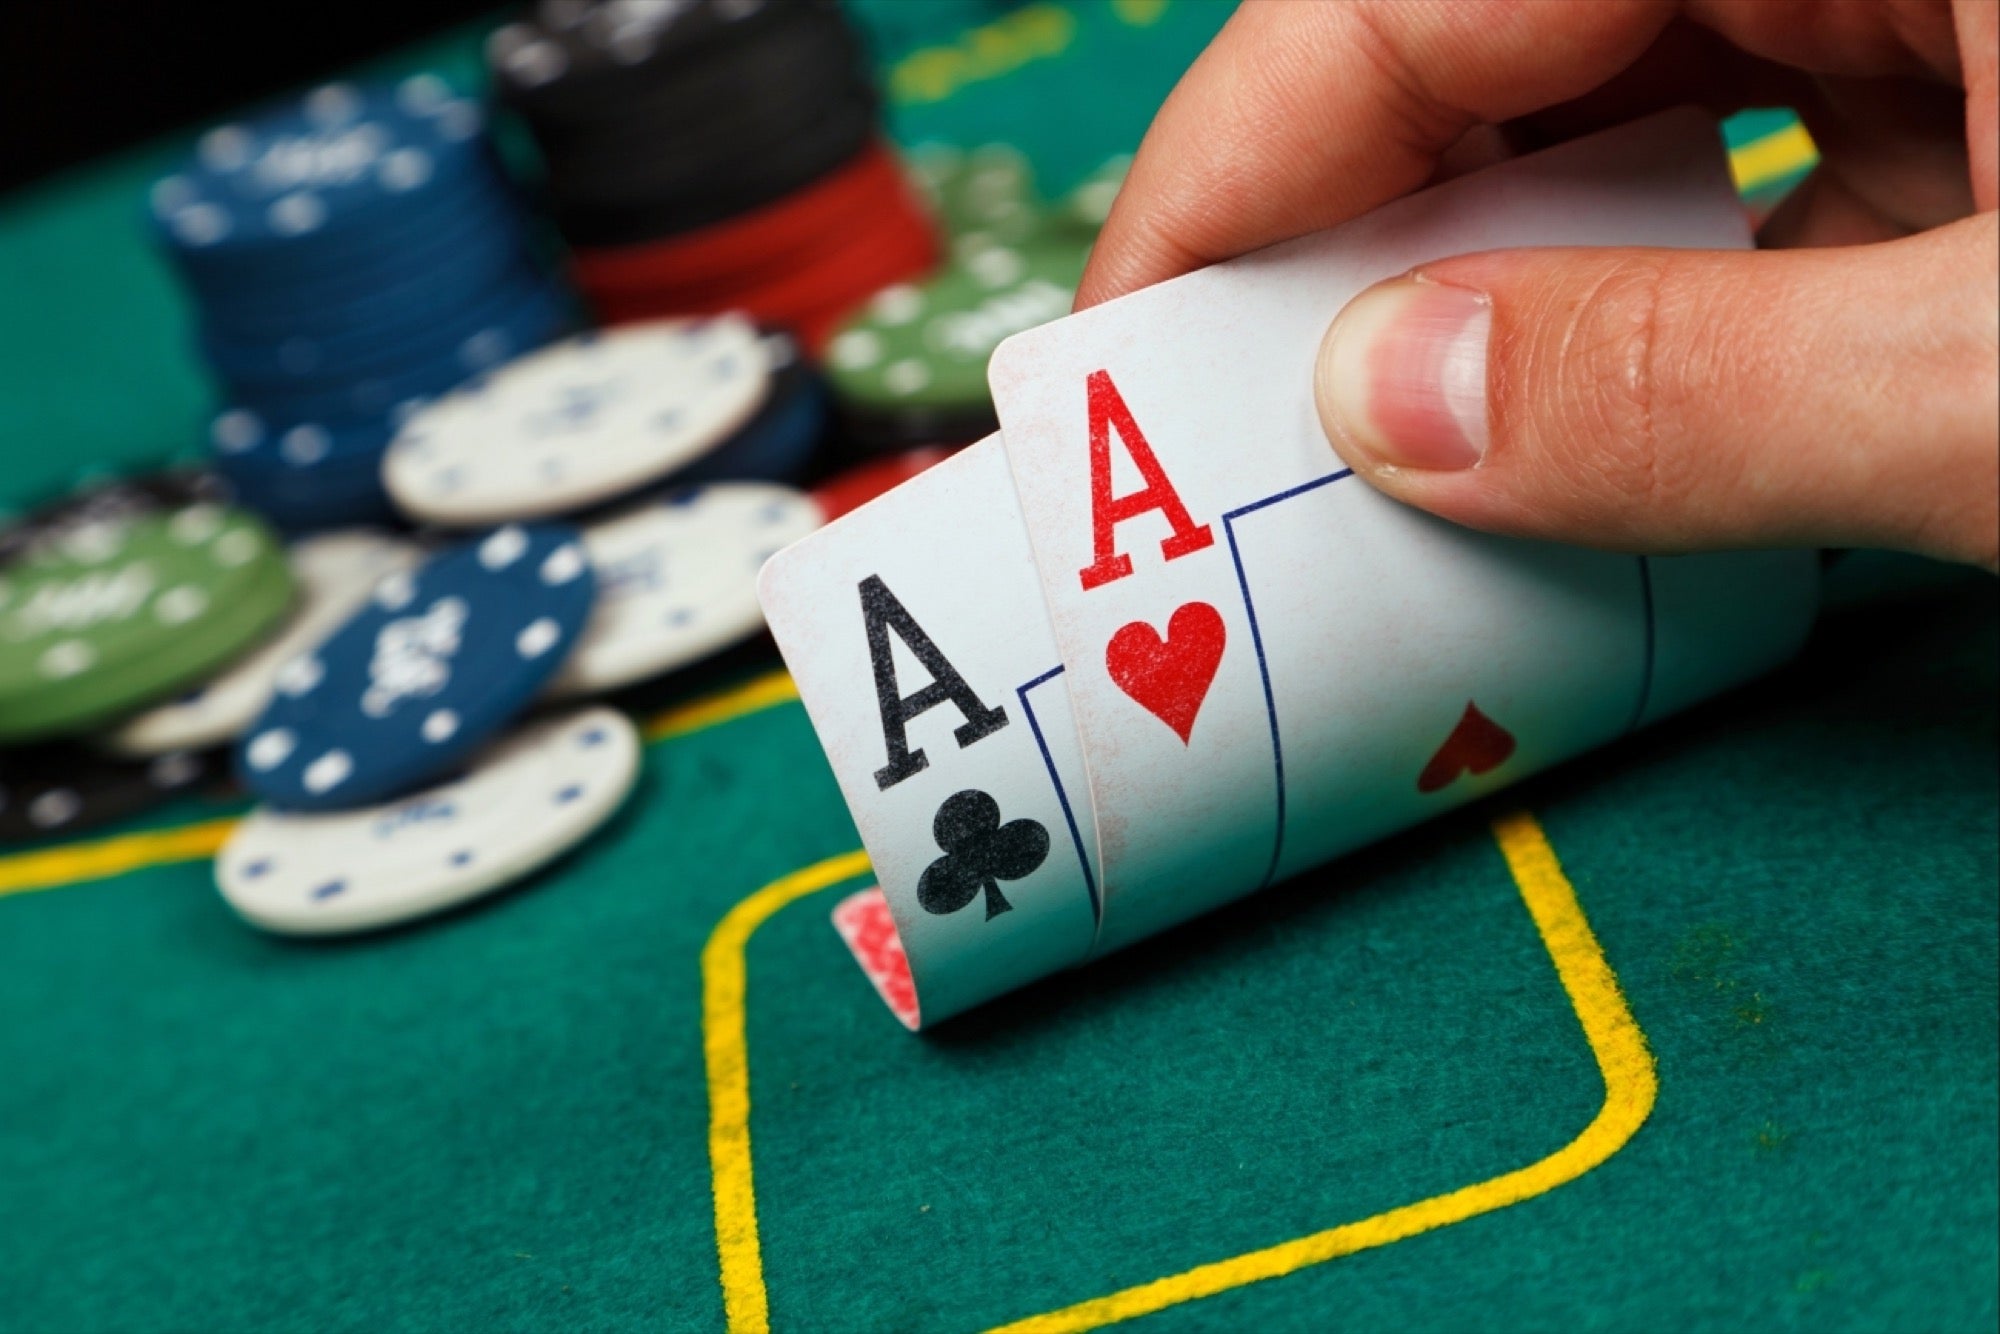 Tips for using online casinos